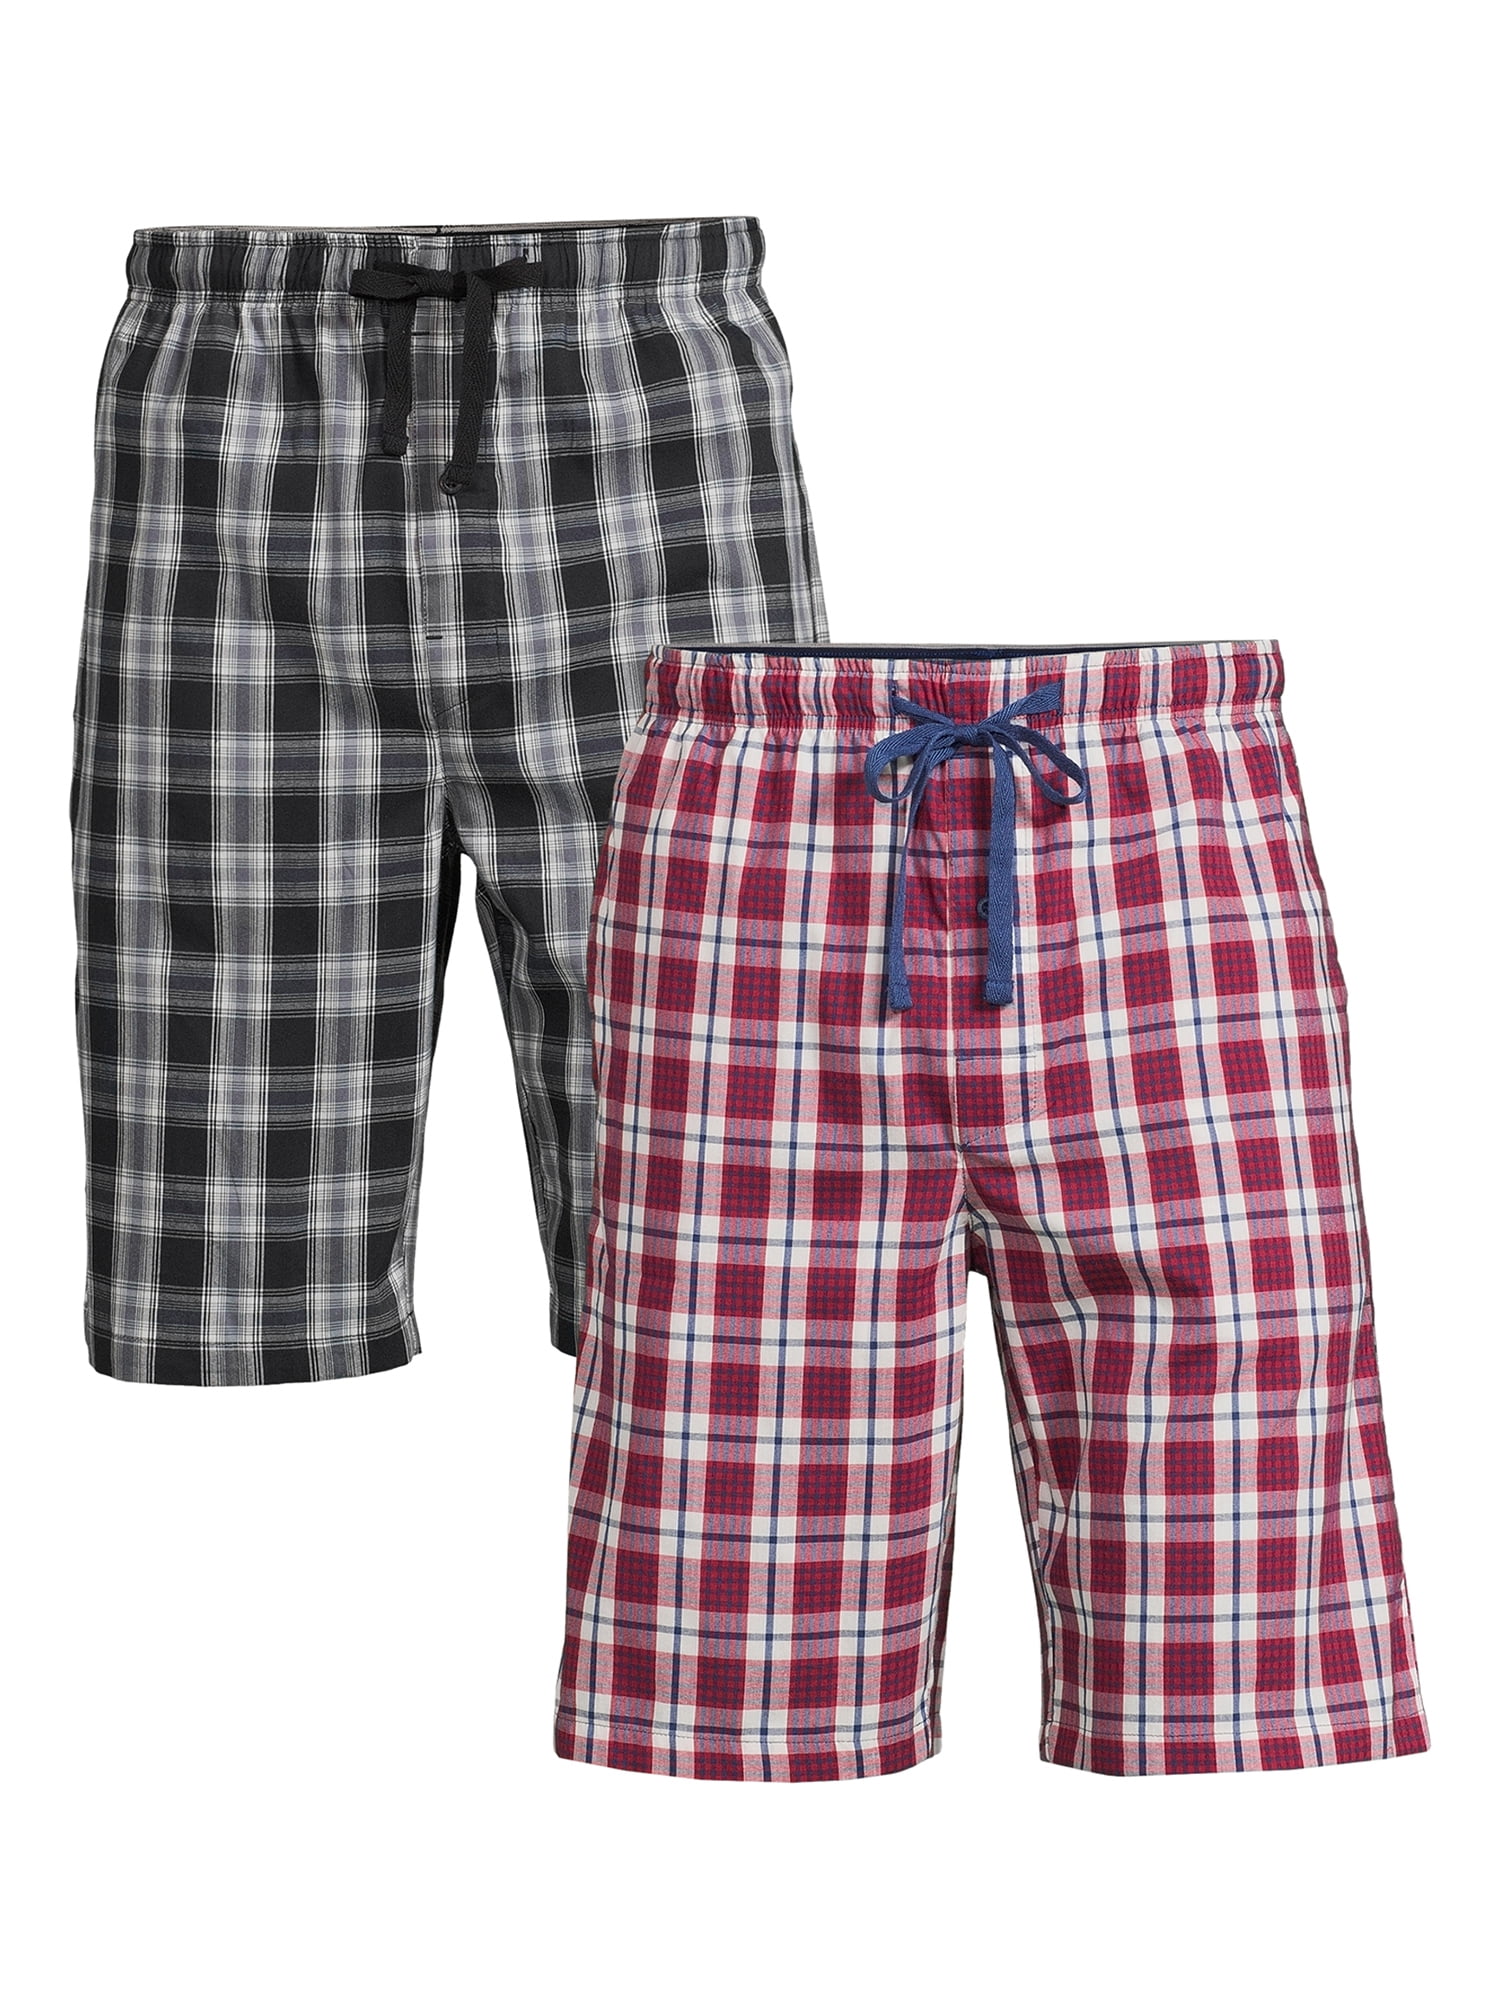 Hanes Men's and Big Men's Stretch Sleep Jam Shorts, 2-Pack, Sizes S-5X 